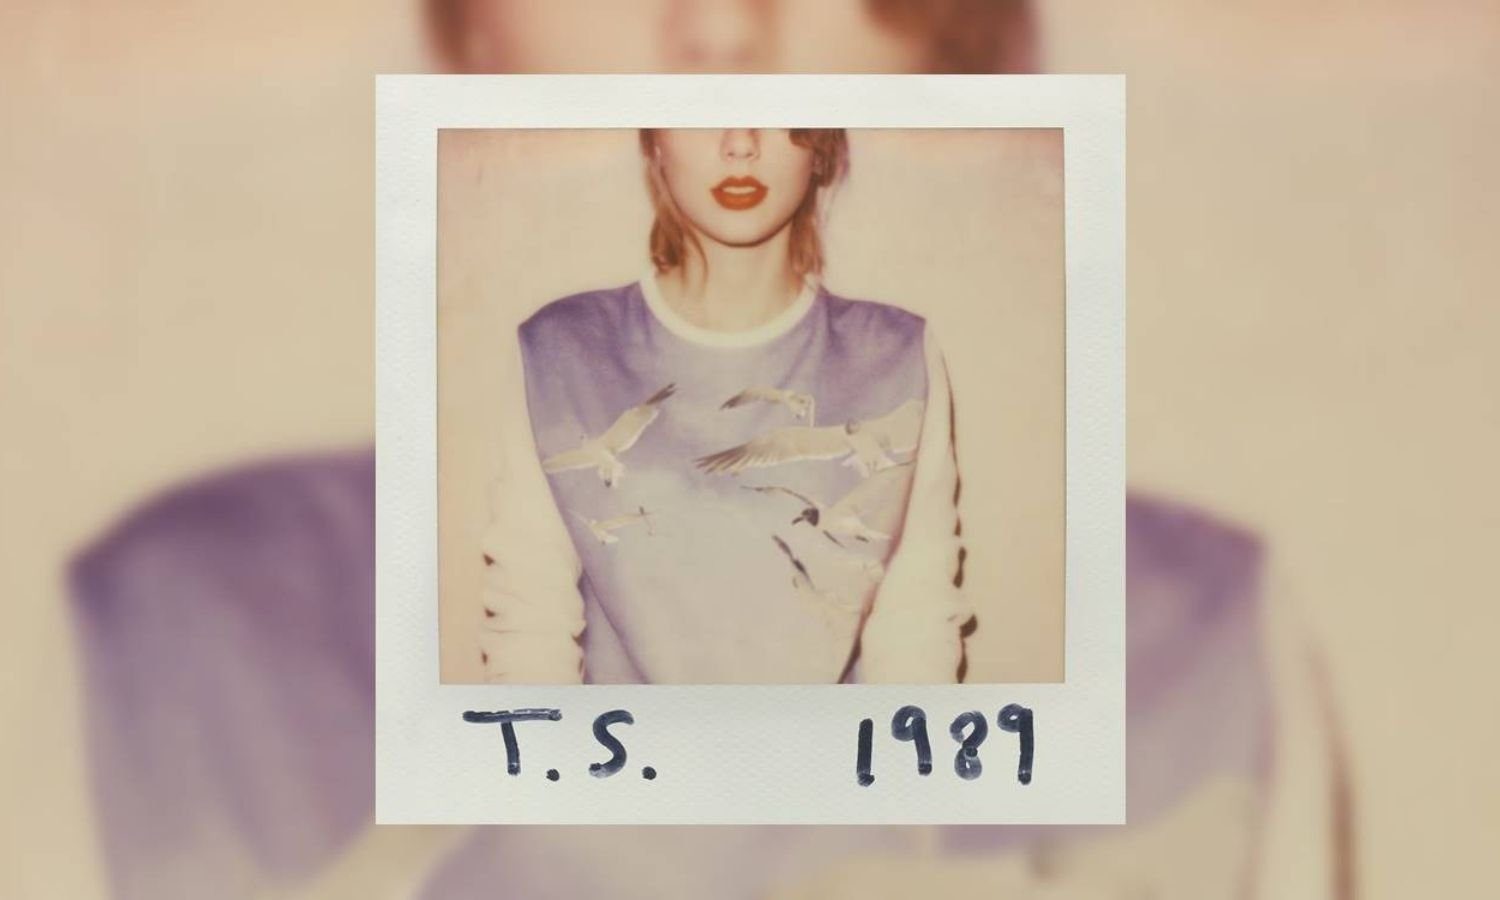 OTD in 2014: Taylor Swift released her fifth studio album "1989."